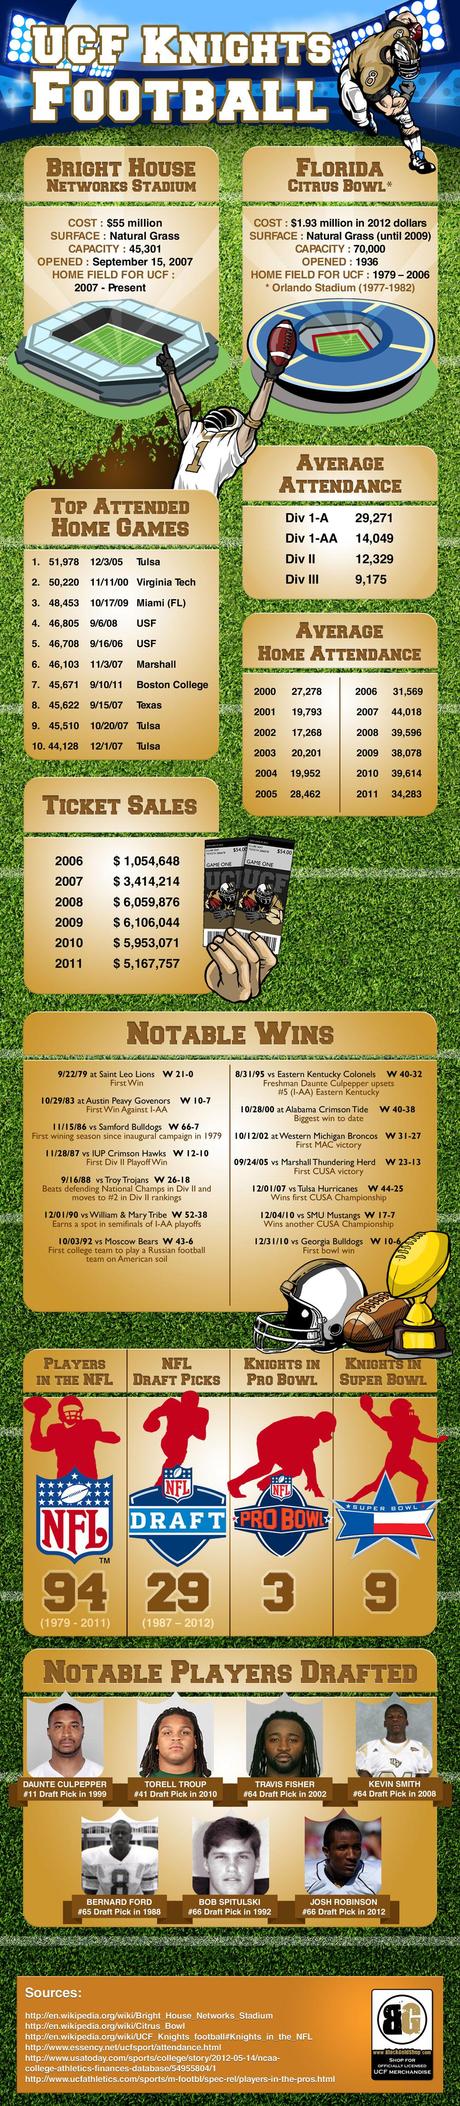 UCF Football Infographic